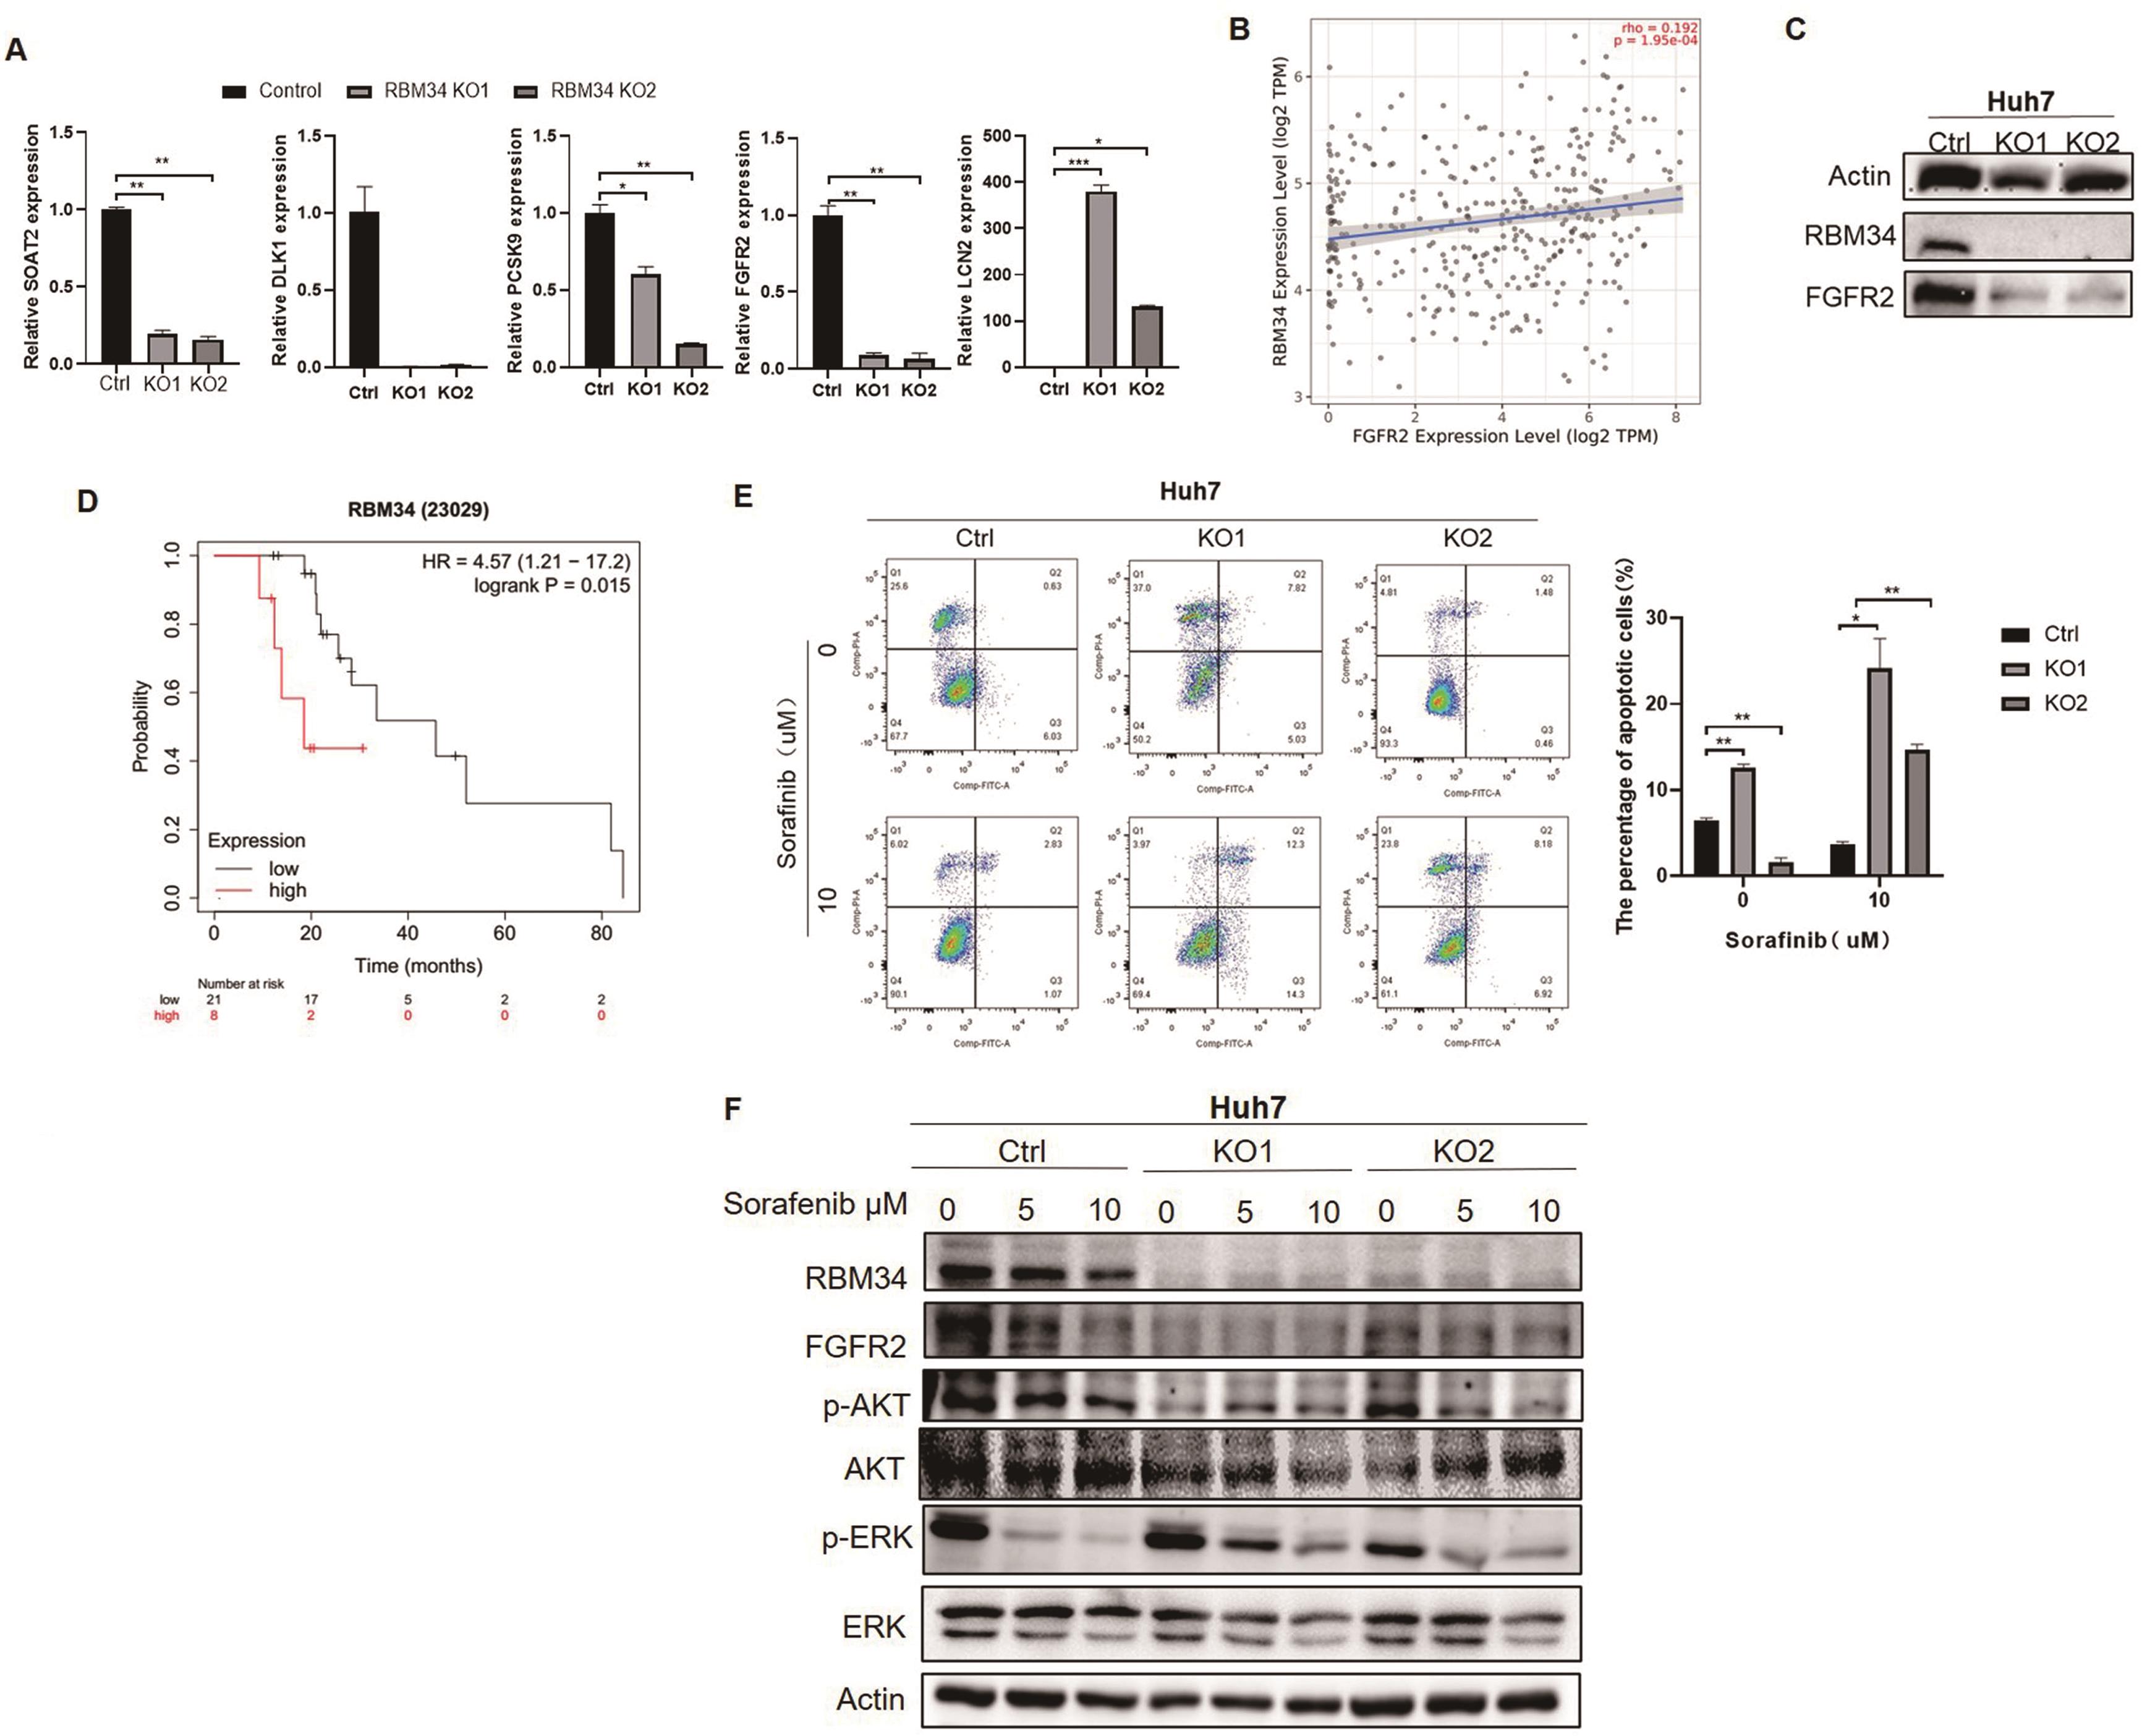 Suppression of RBM34 enhances sorafenib sensitivity in part by downregulating FGFR2.